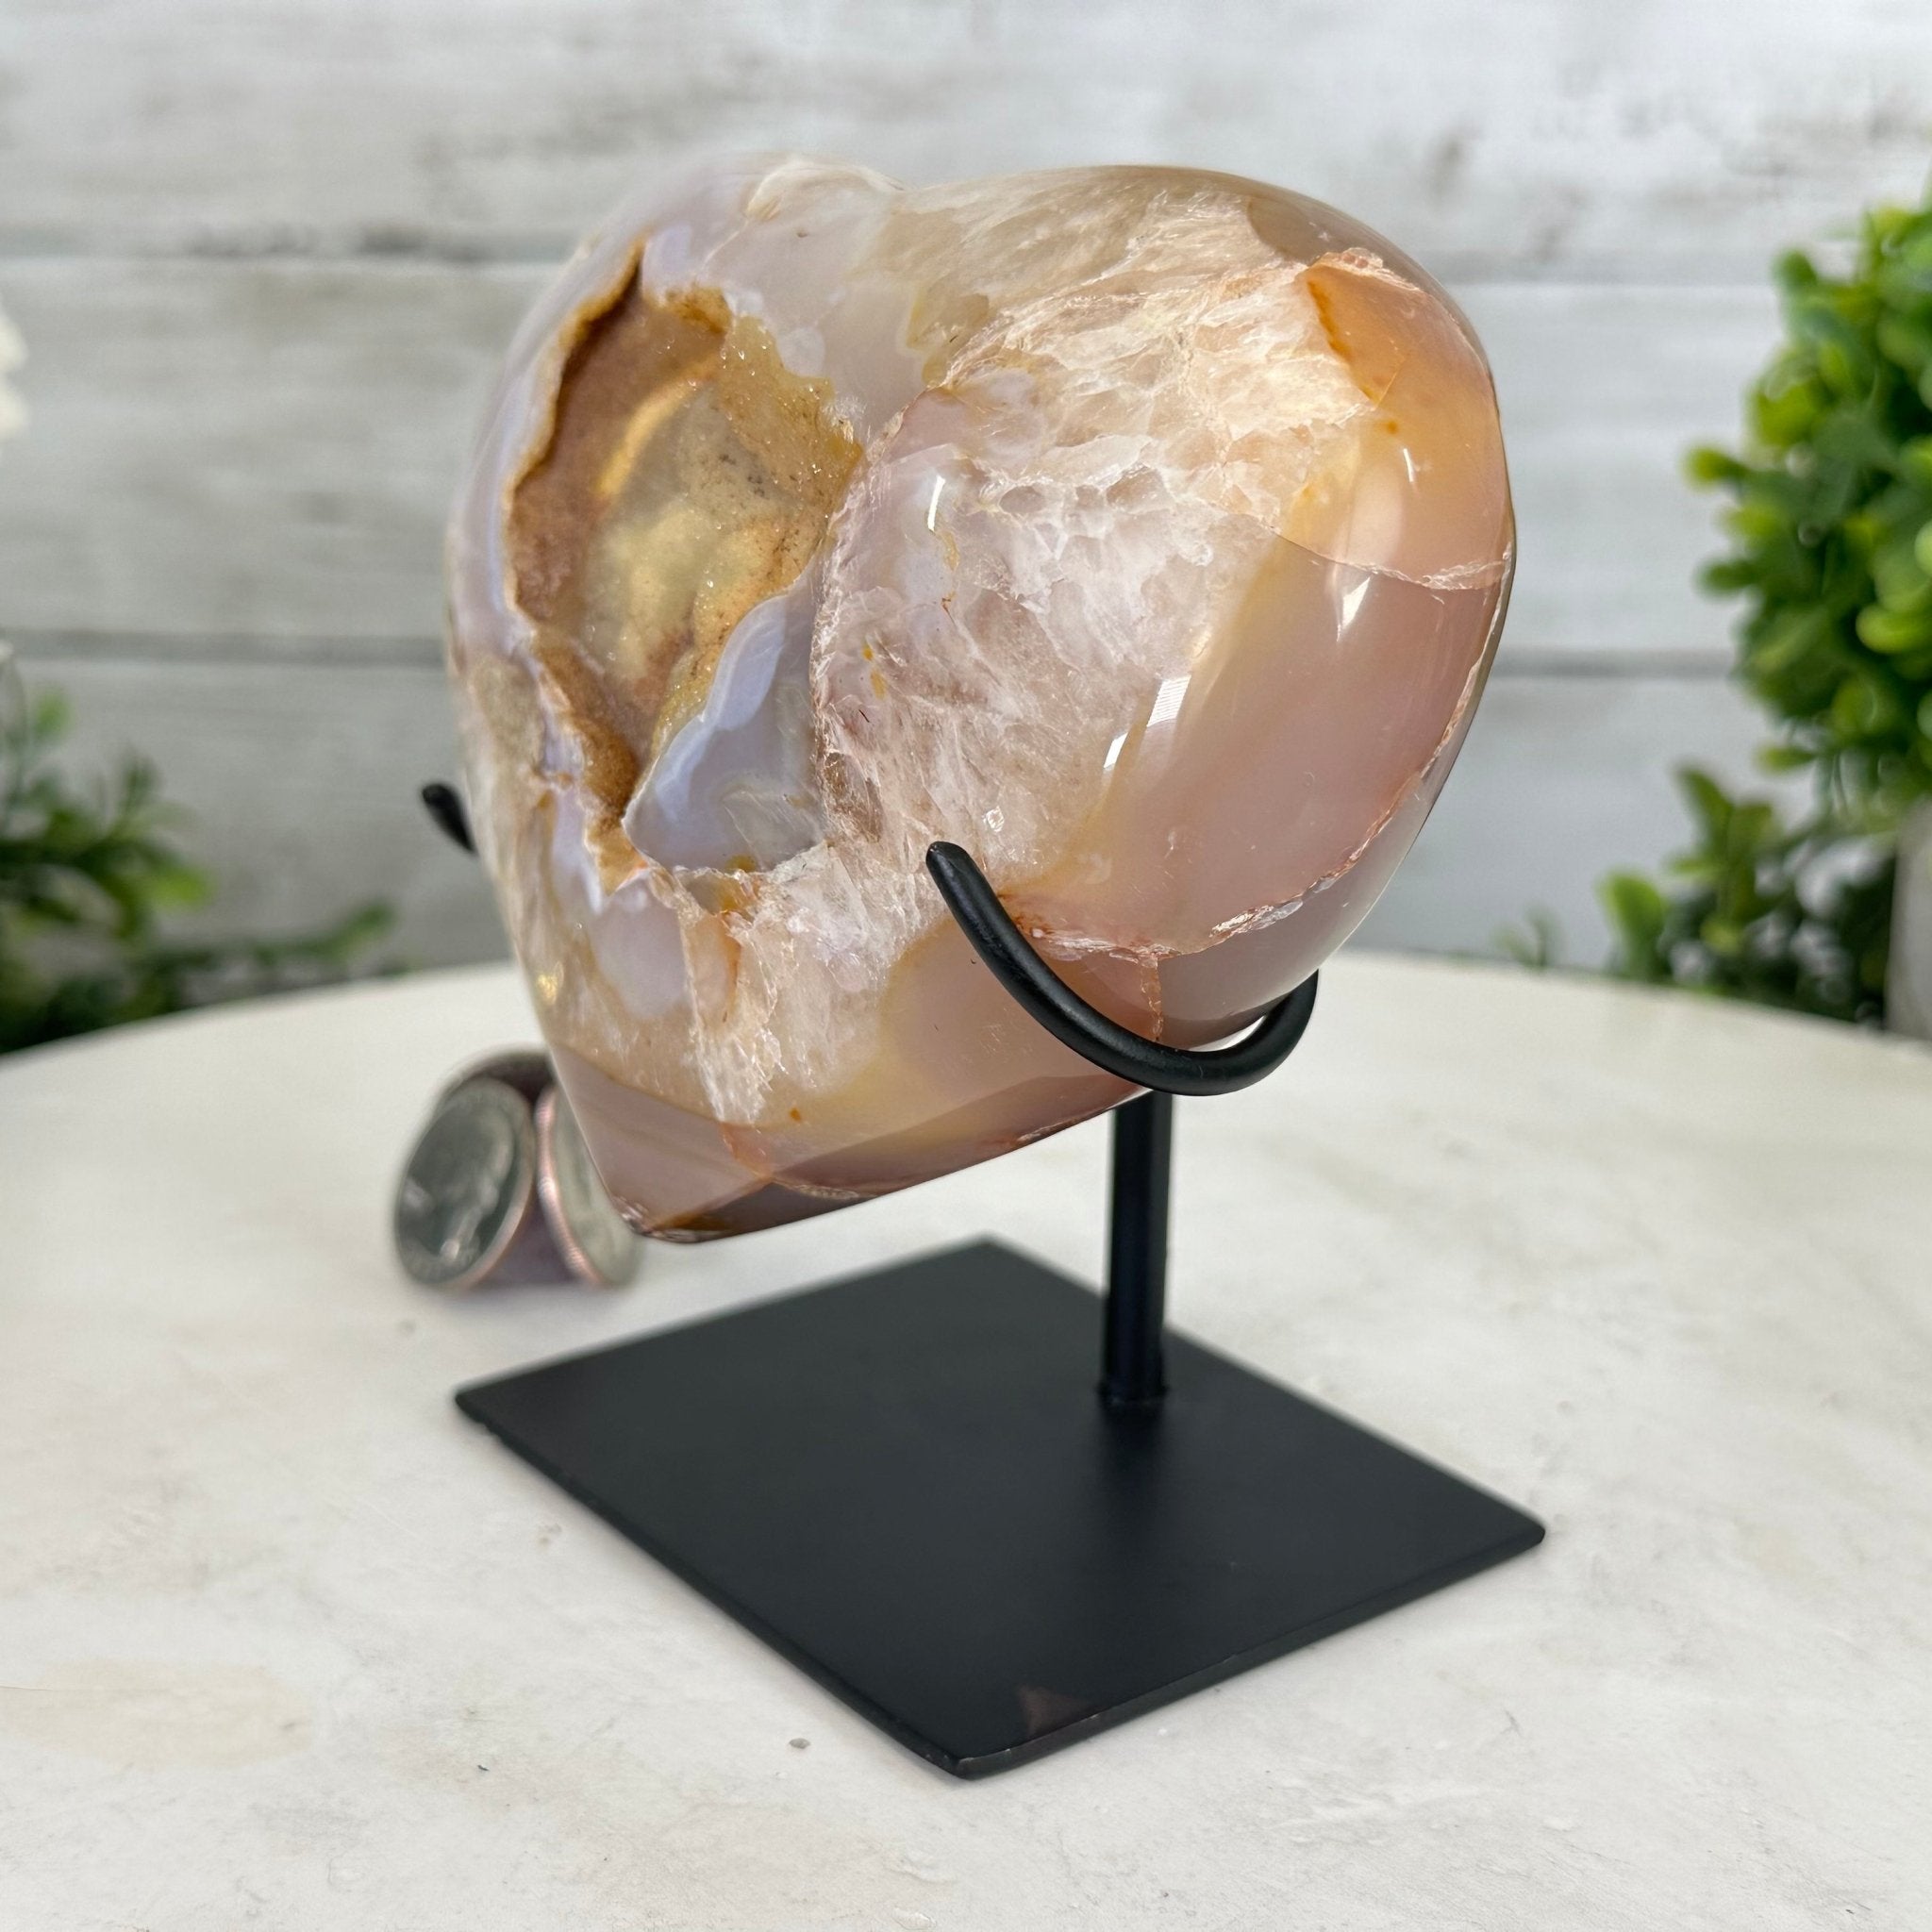 Polished Agate Heart Geode on a Metal Stand, 2.8 lbs & 5" Tall, Model #5468-0037 by Brazil Gems - Brazil GemsBrazil GemsPolished Agate Heart Geode on a Metal Stand, 2.8 lbs & 5" Tall, Model #5468-0037 by Brazil GemsHearts5468-0037